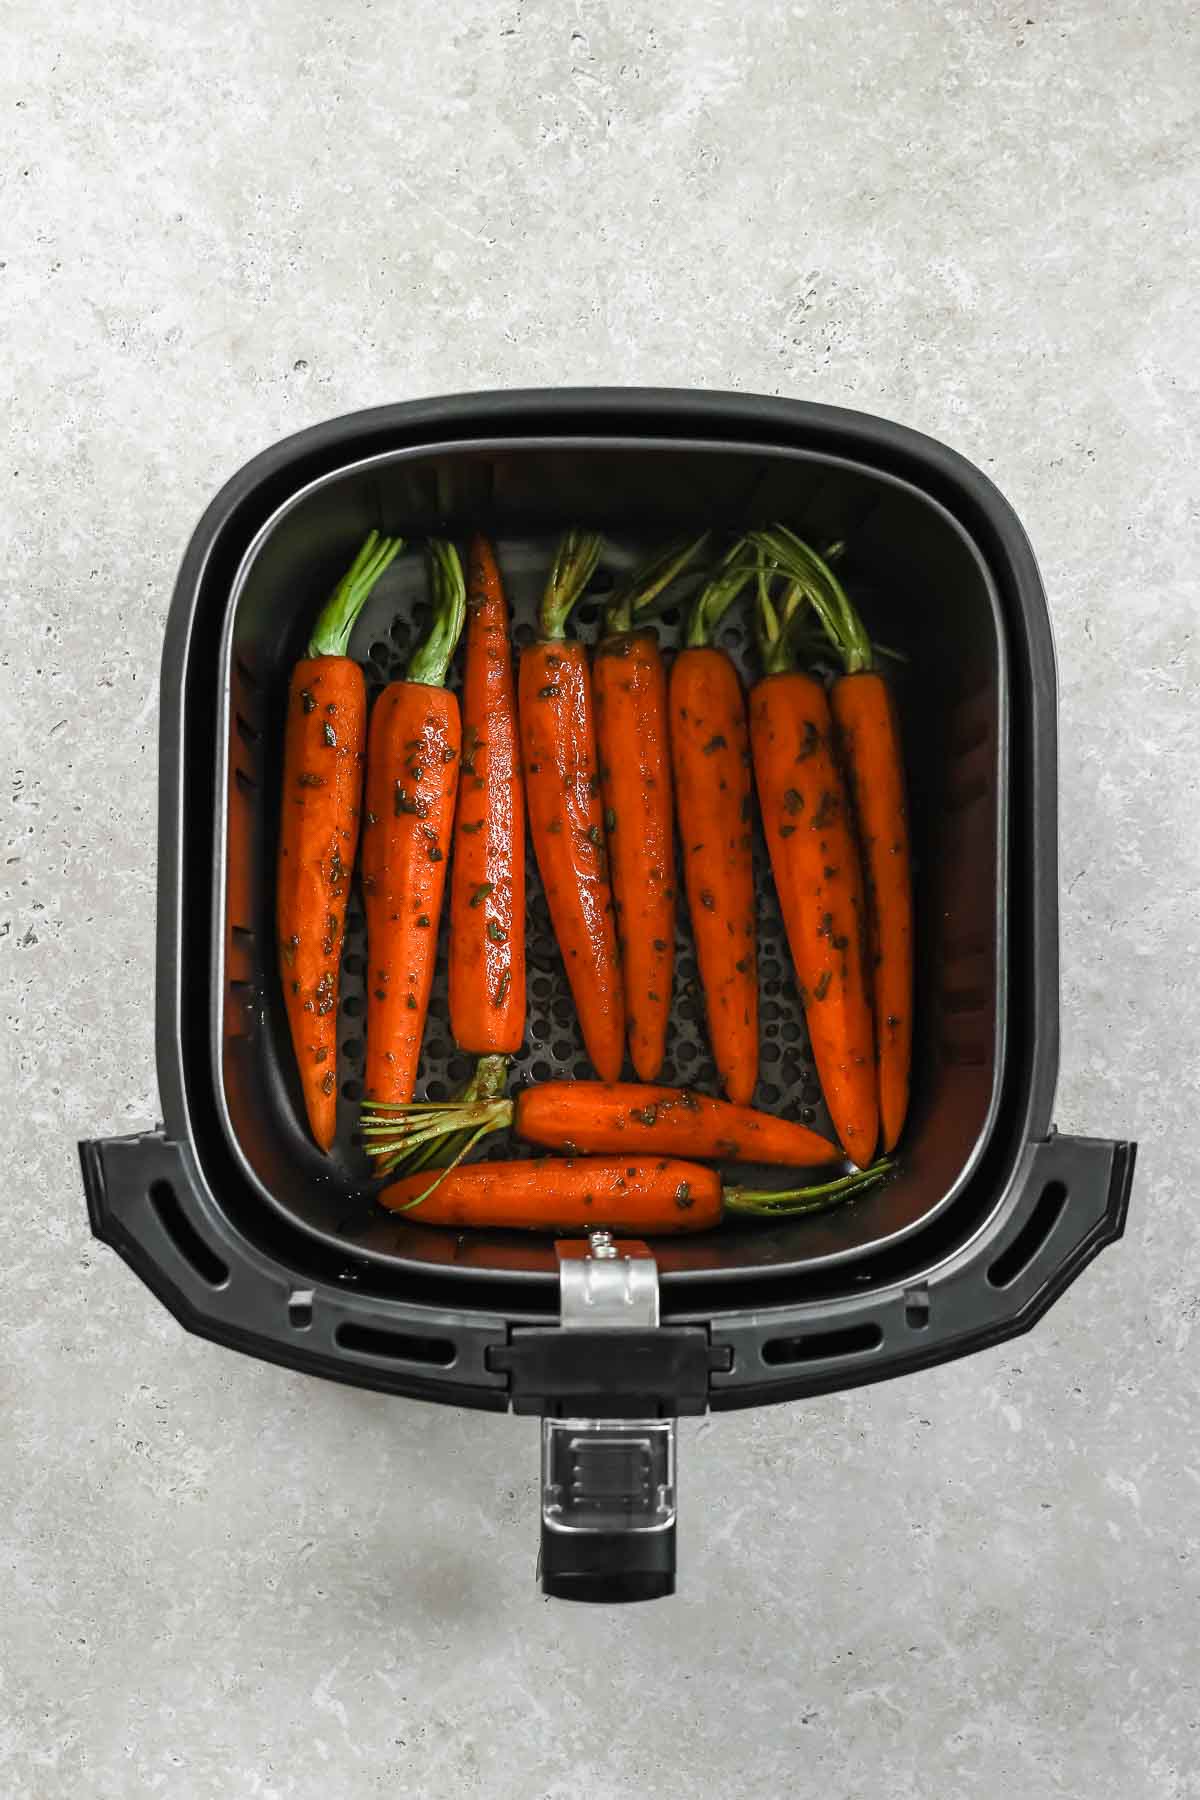 seasoned carrots arranged in an air fryer before baking.